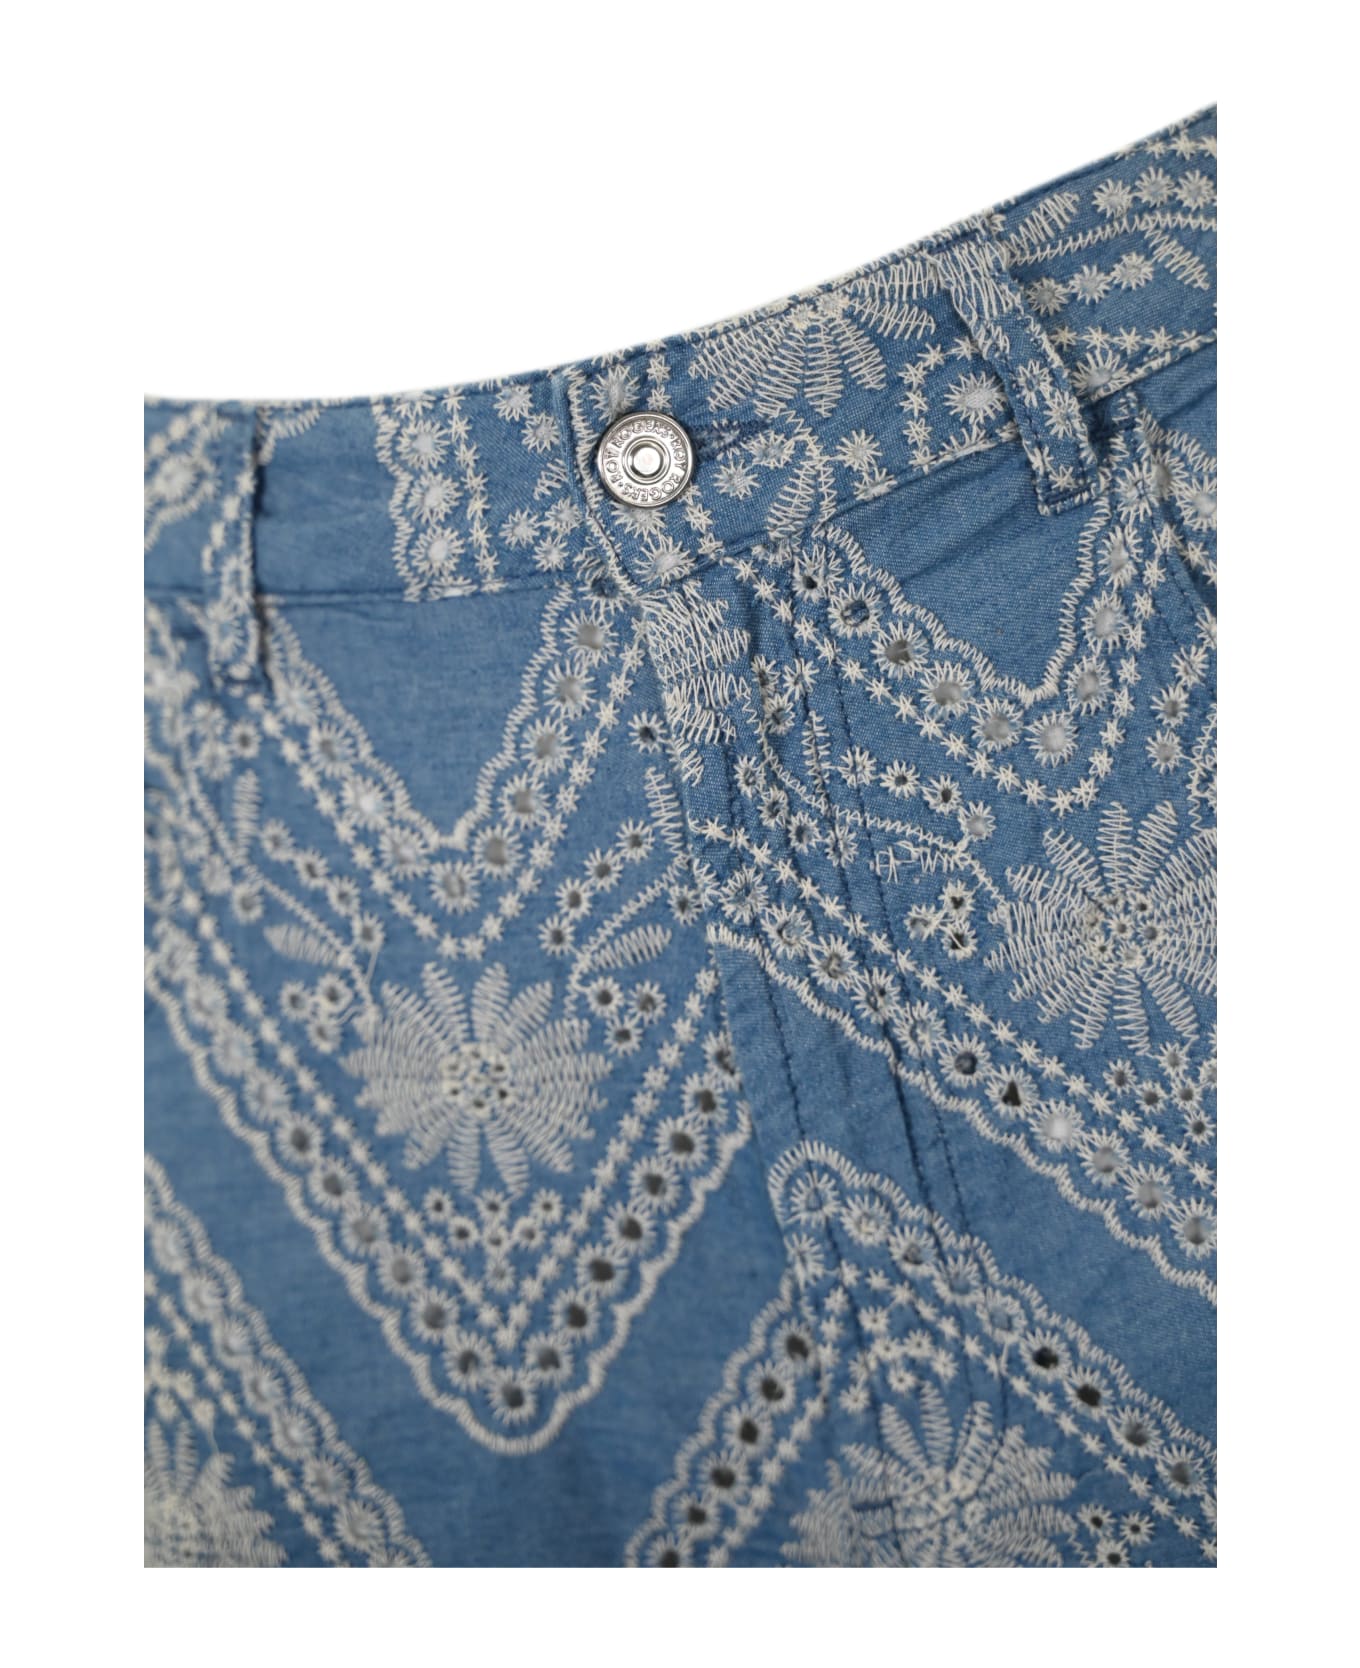 Roy Rogers Old Glory Chambray Embroidery Shorts - Washed indigo